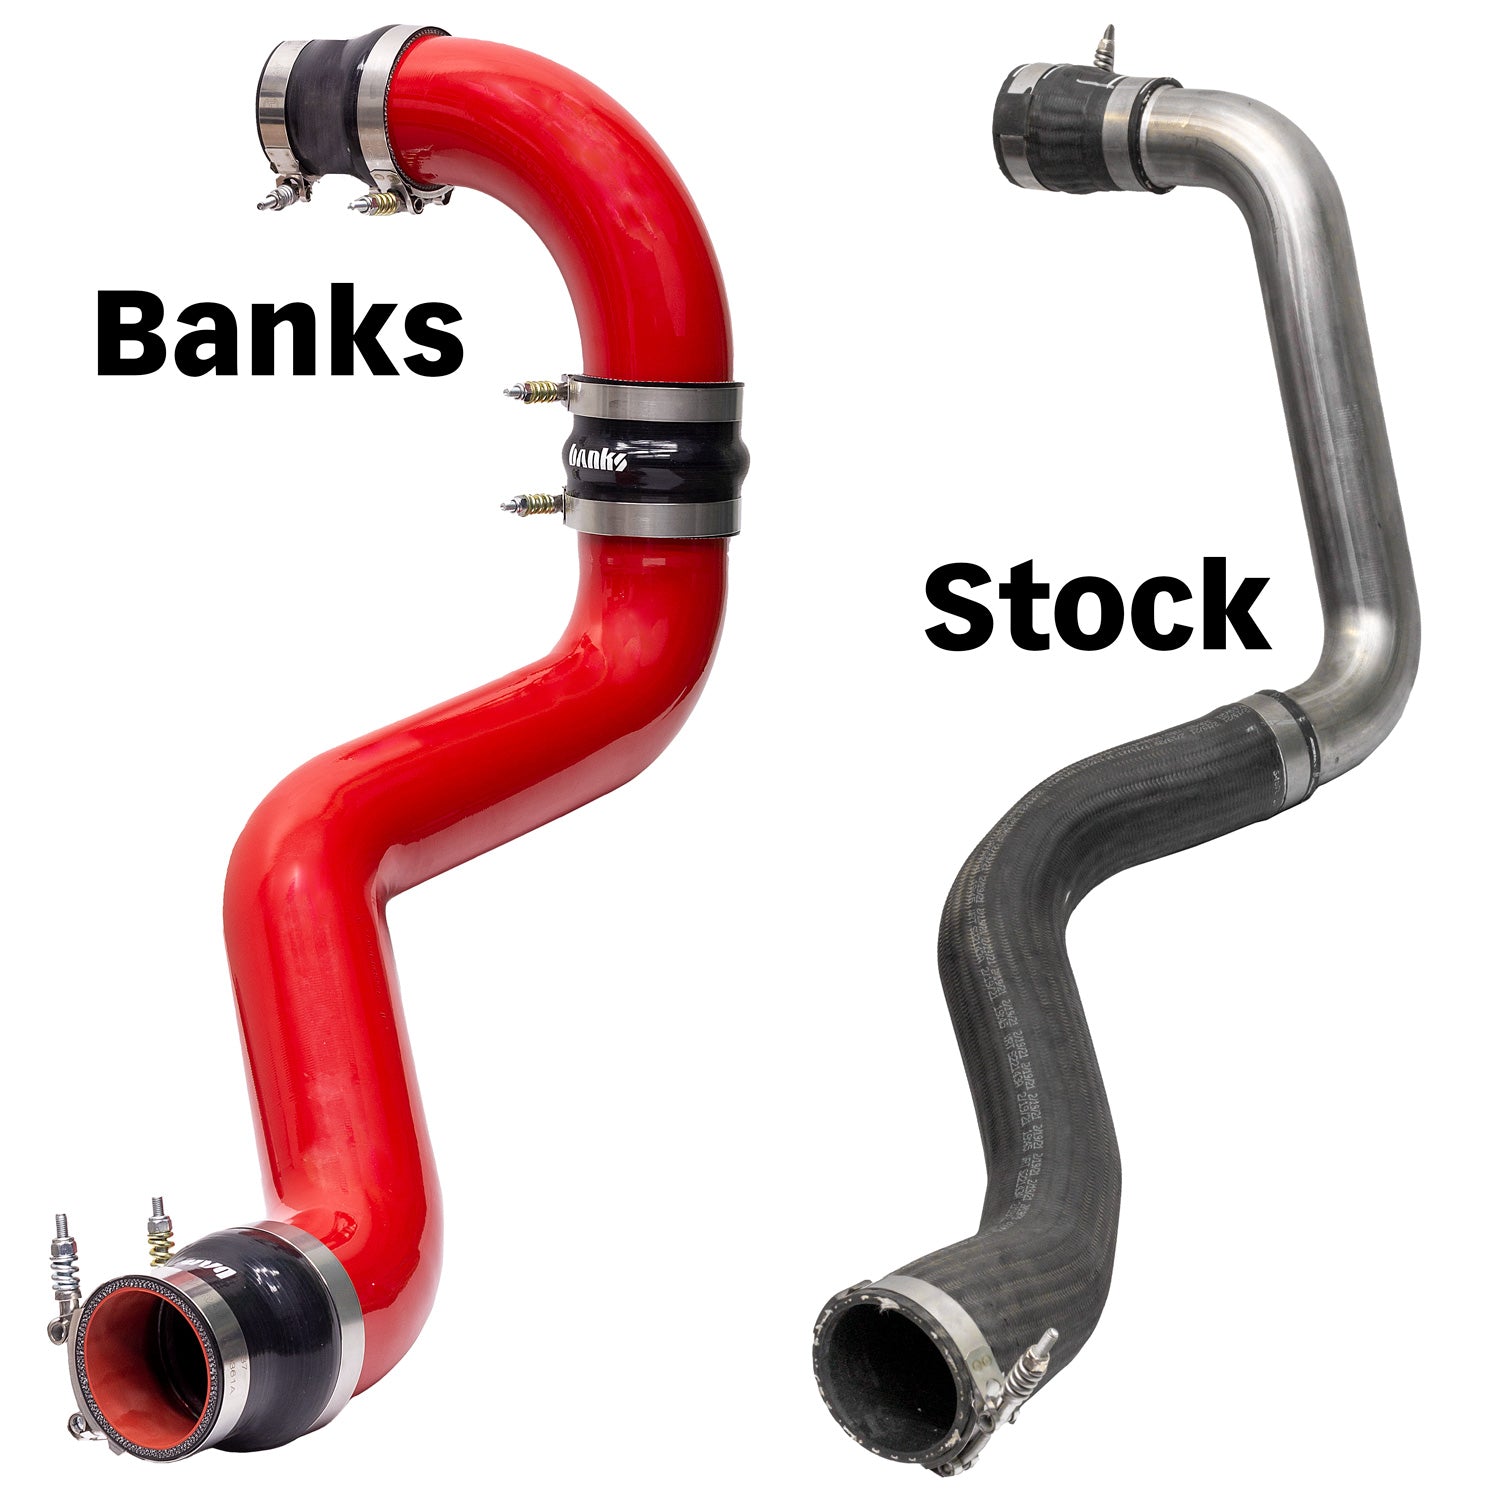 Comparison photo of the Banks vs Stock 2020+ L5P Hot-Side Boost-Tube